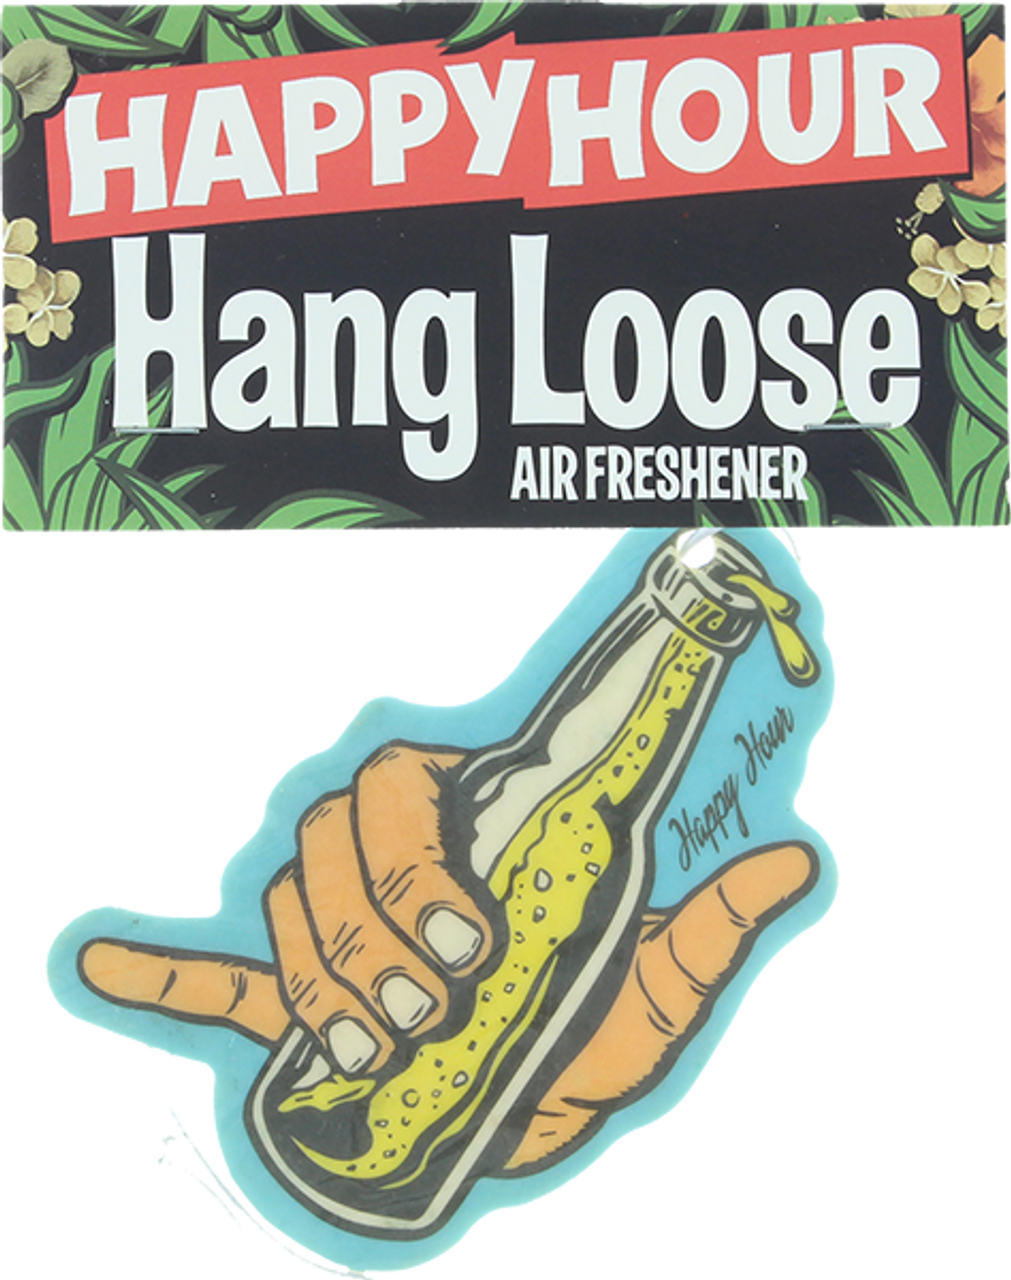 HAPPY HOUR AIR FRESHENER HANG LOOSE